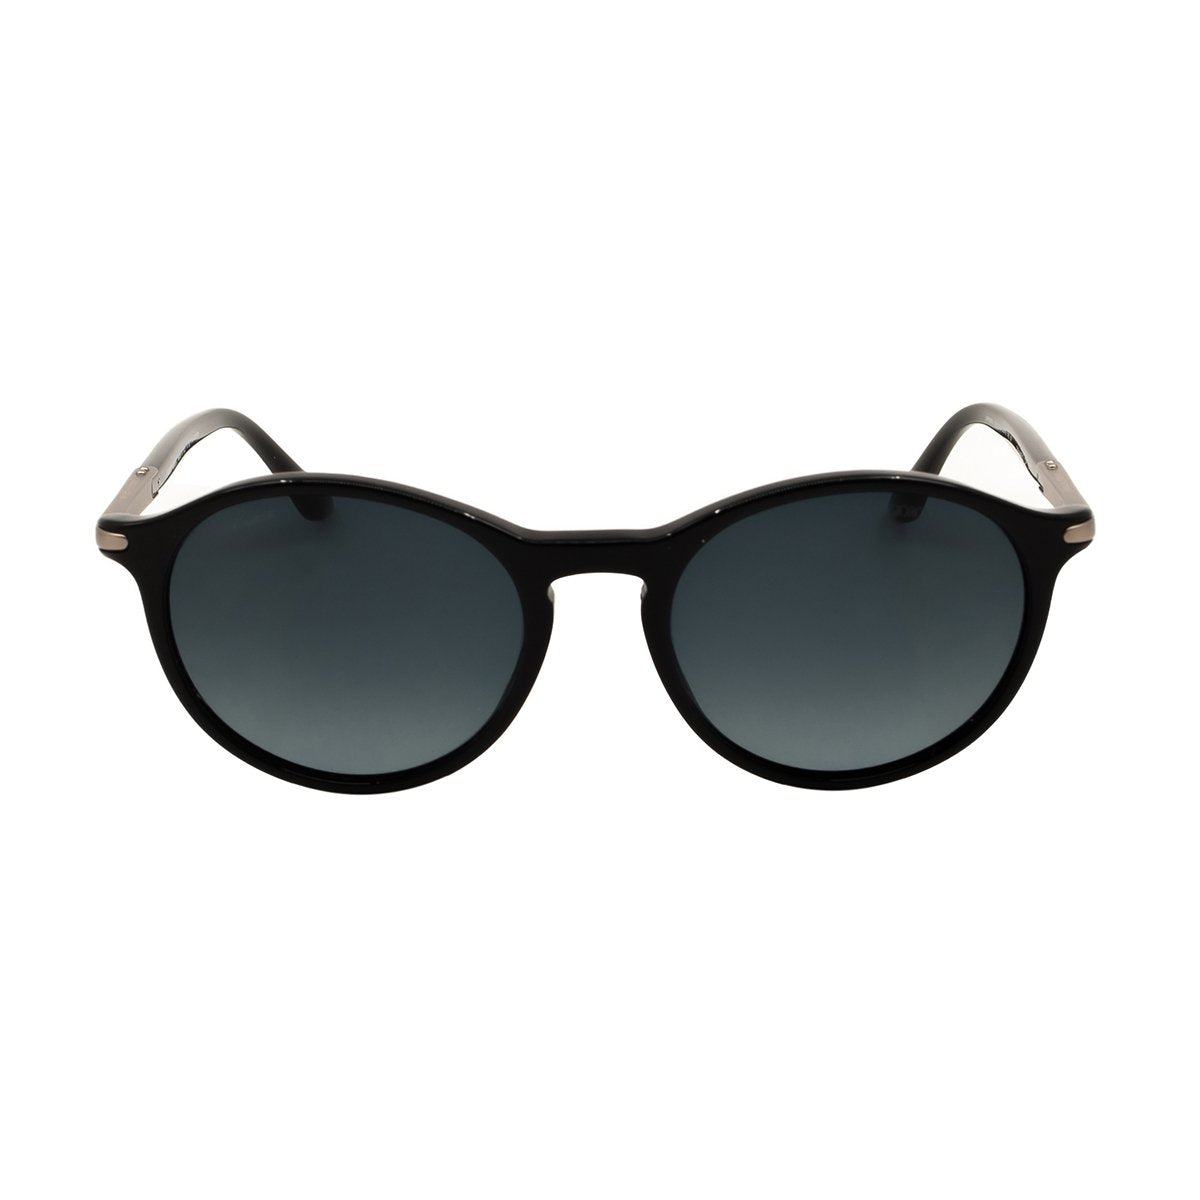 Sunglasses Giorgio Armani AR 6063 (300371) Man | Free Shipping Shop Online